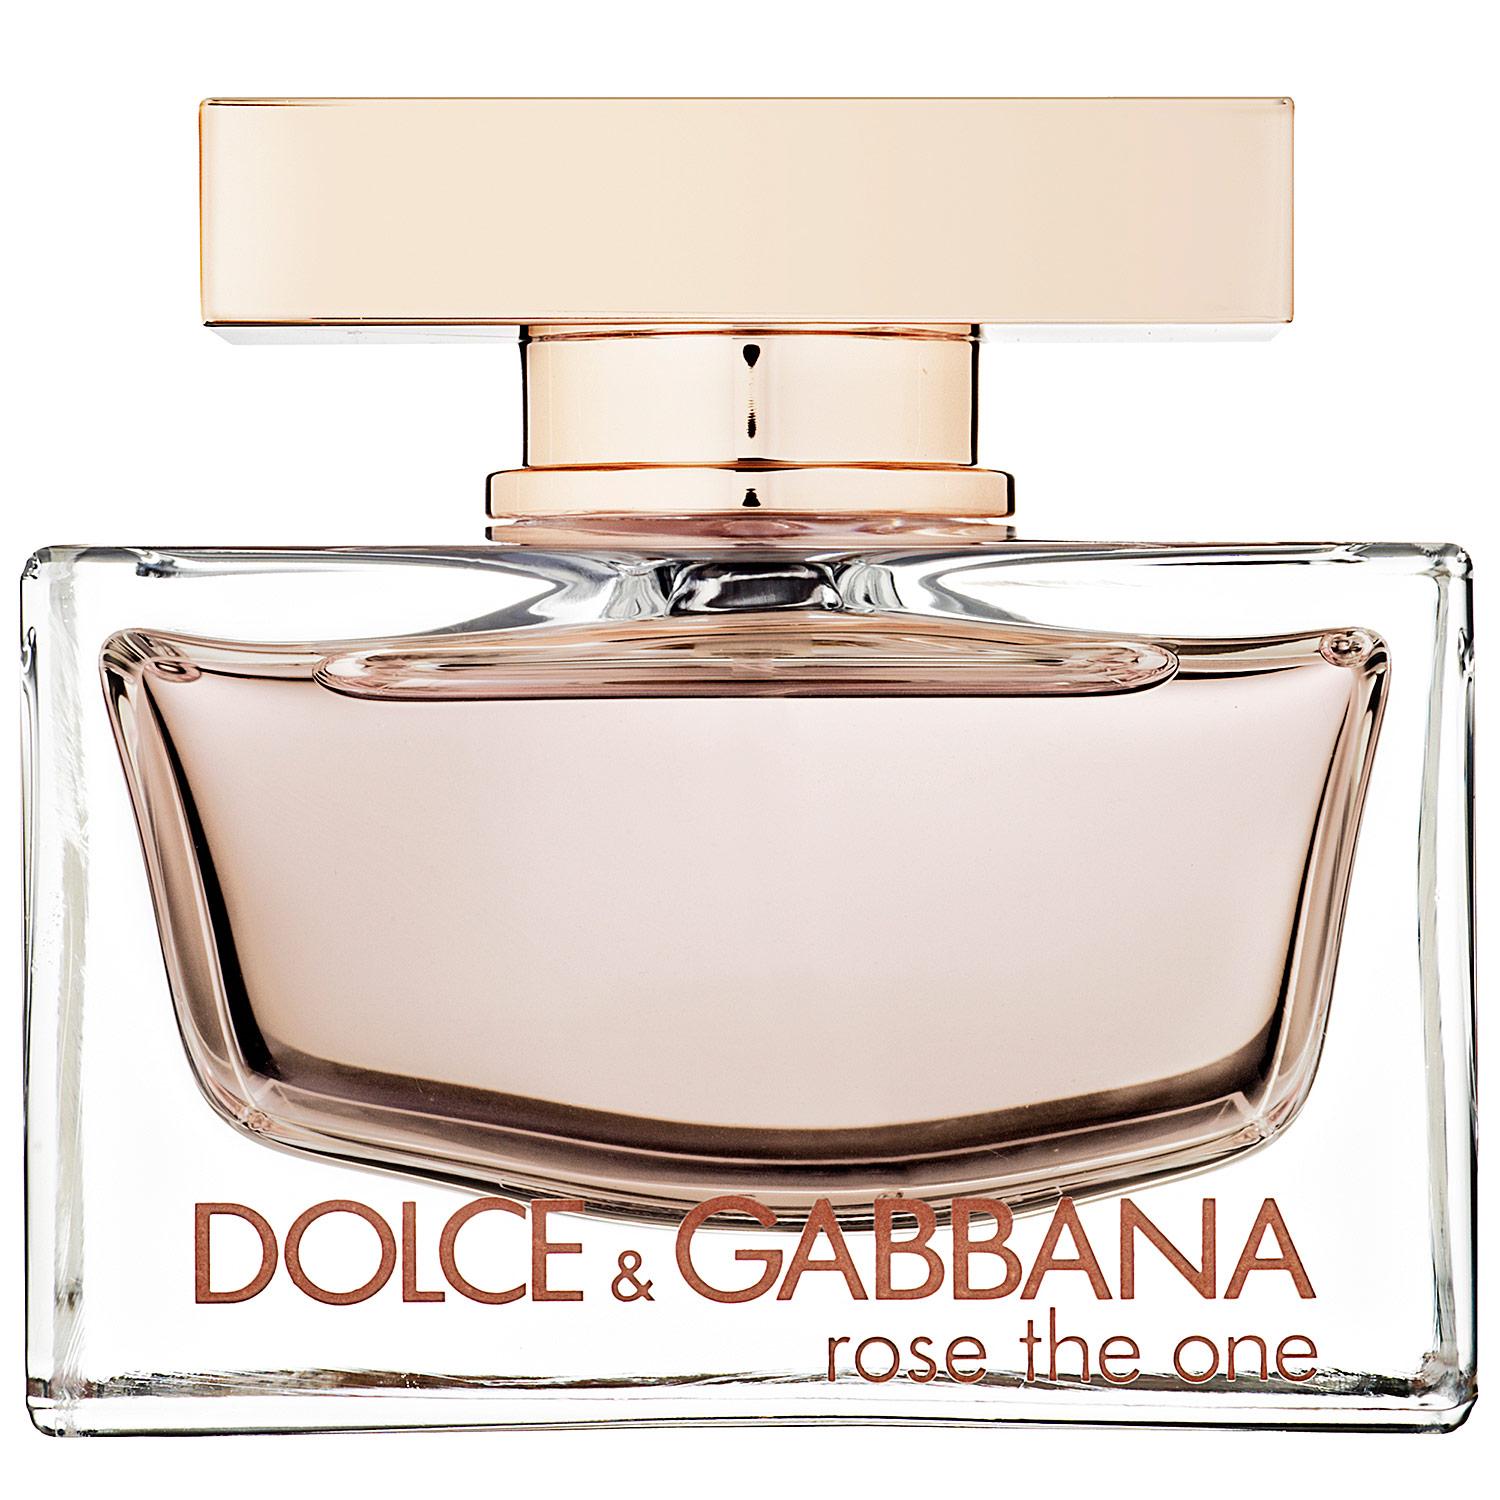 Купить дольче габбана ван. Dolce Gabbana Rose the one 75 ml. Dolce Gabbana the one женские 75 мл. Дольче Габбана Rose the one. Духи Dolce Gabbana Rose.